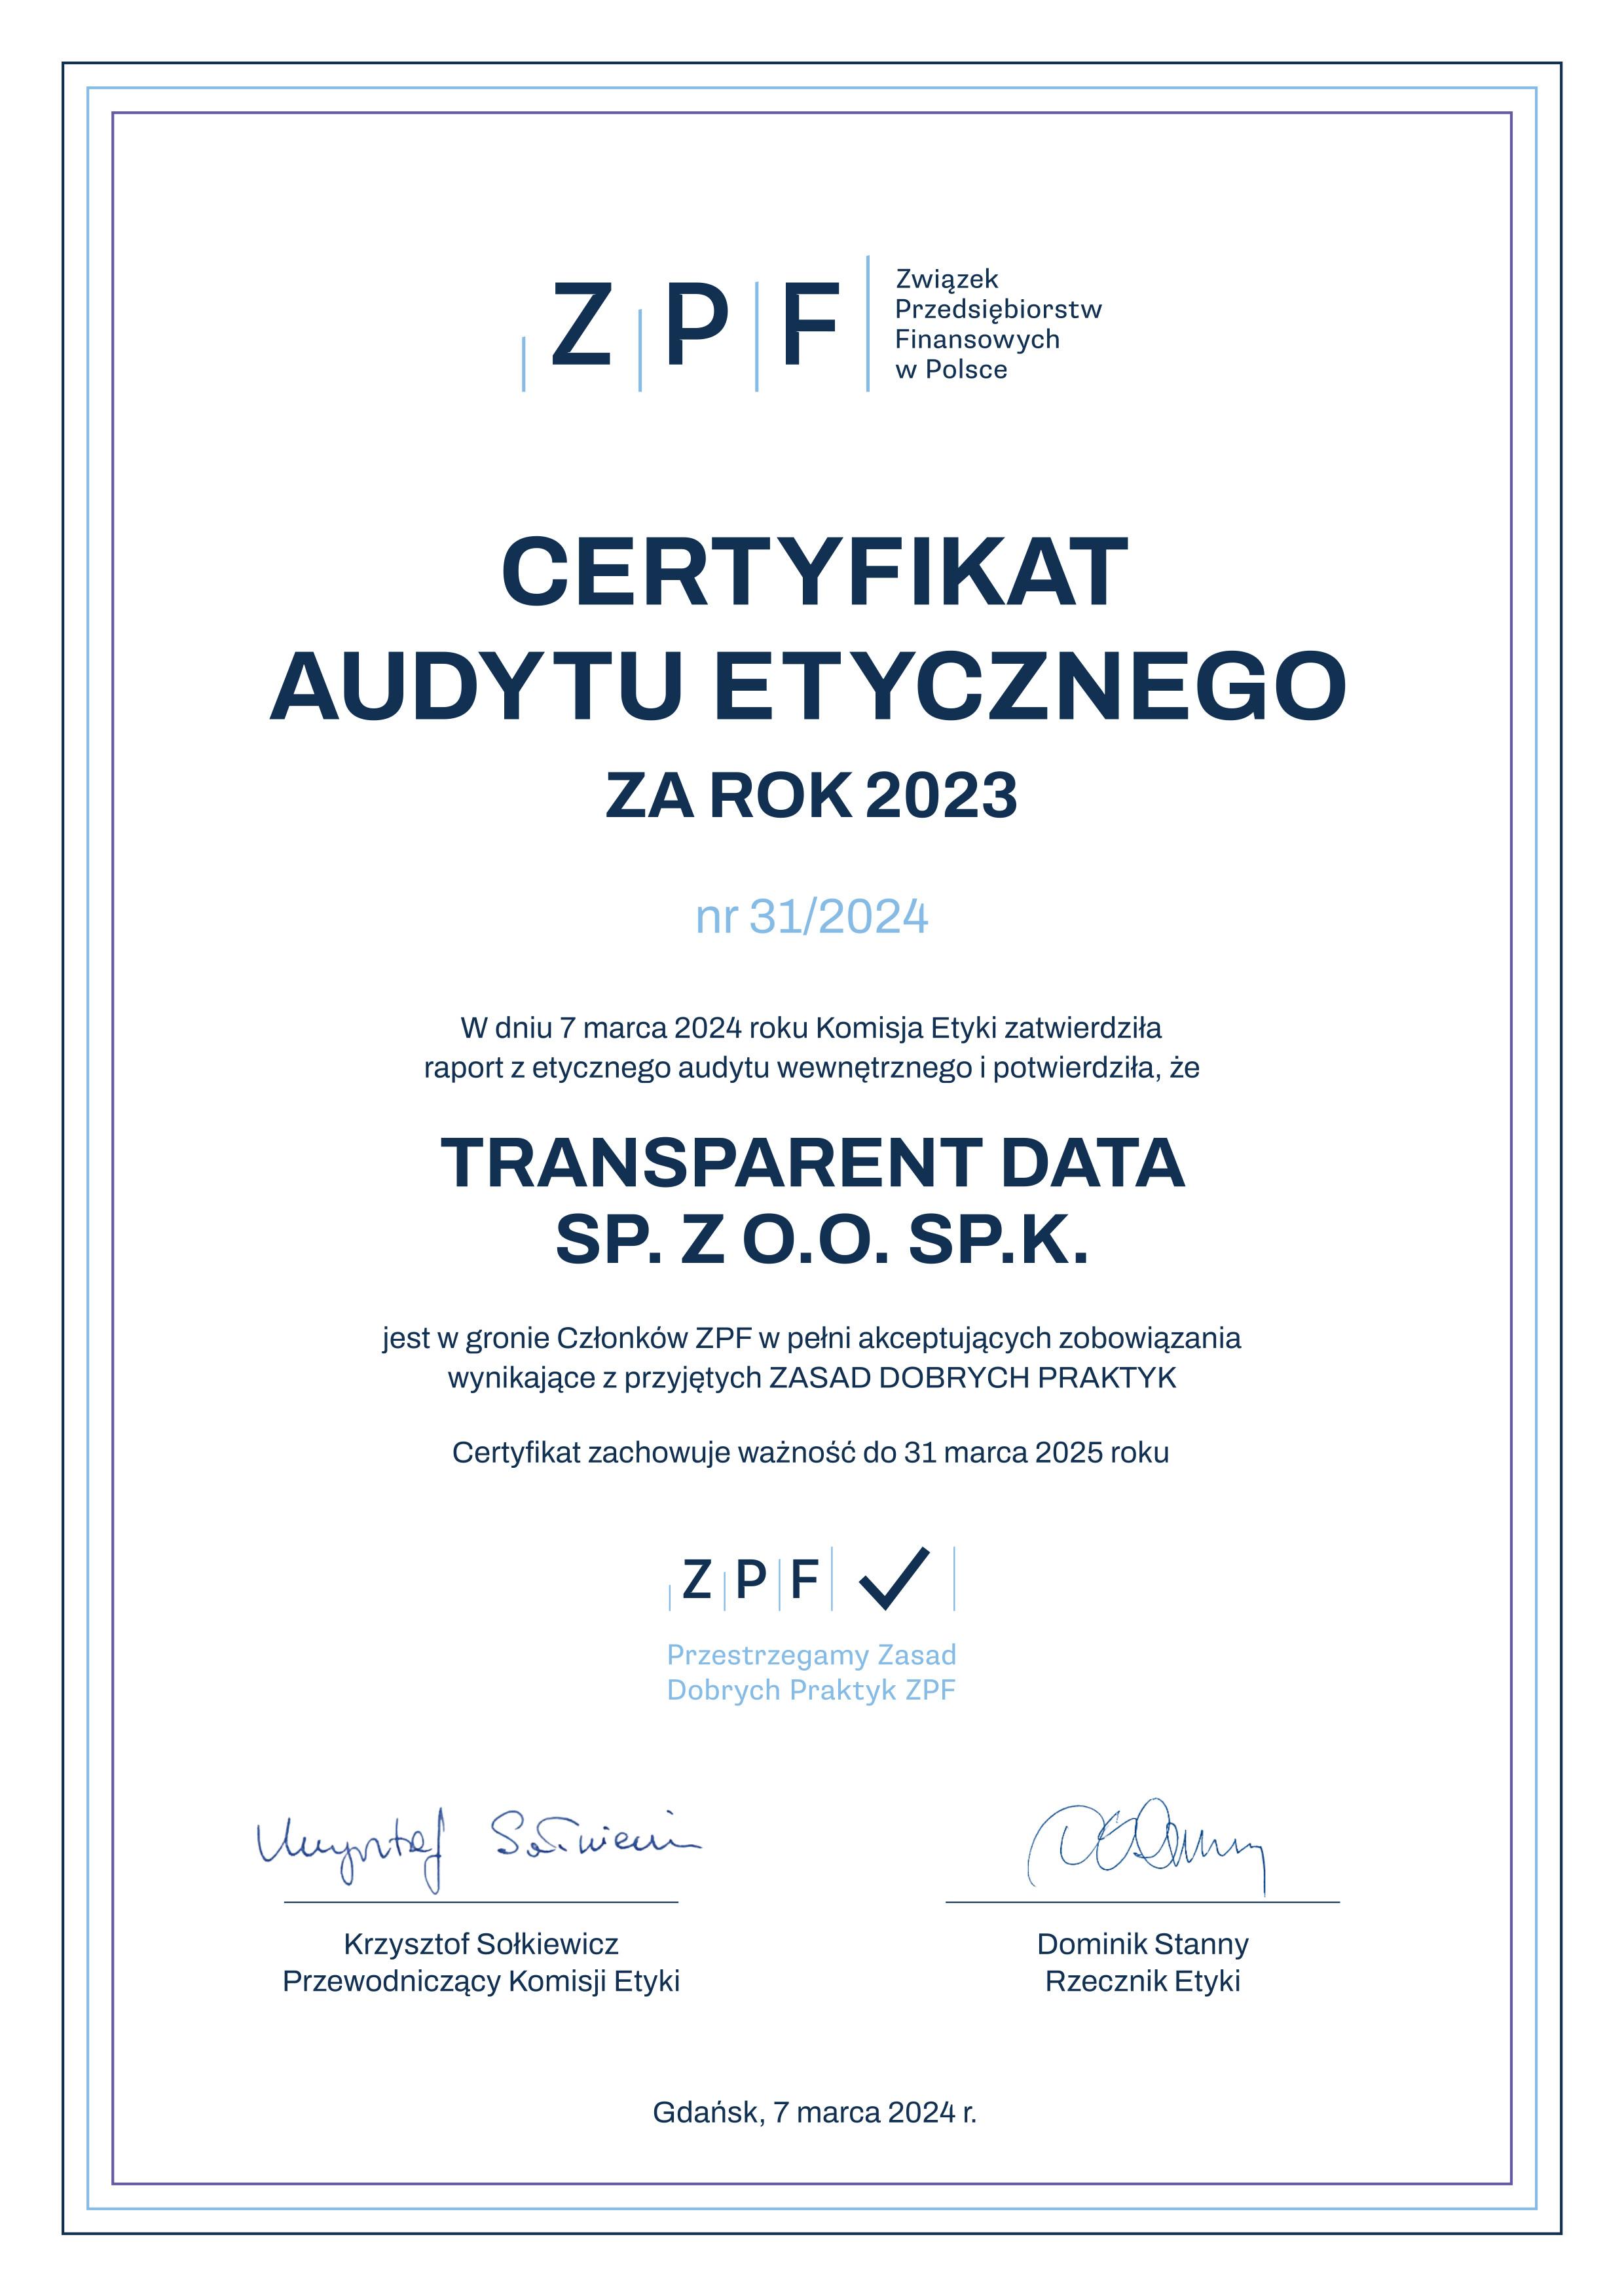 ZPF certificate